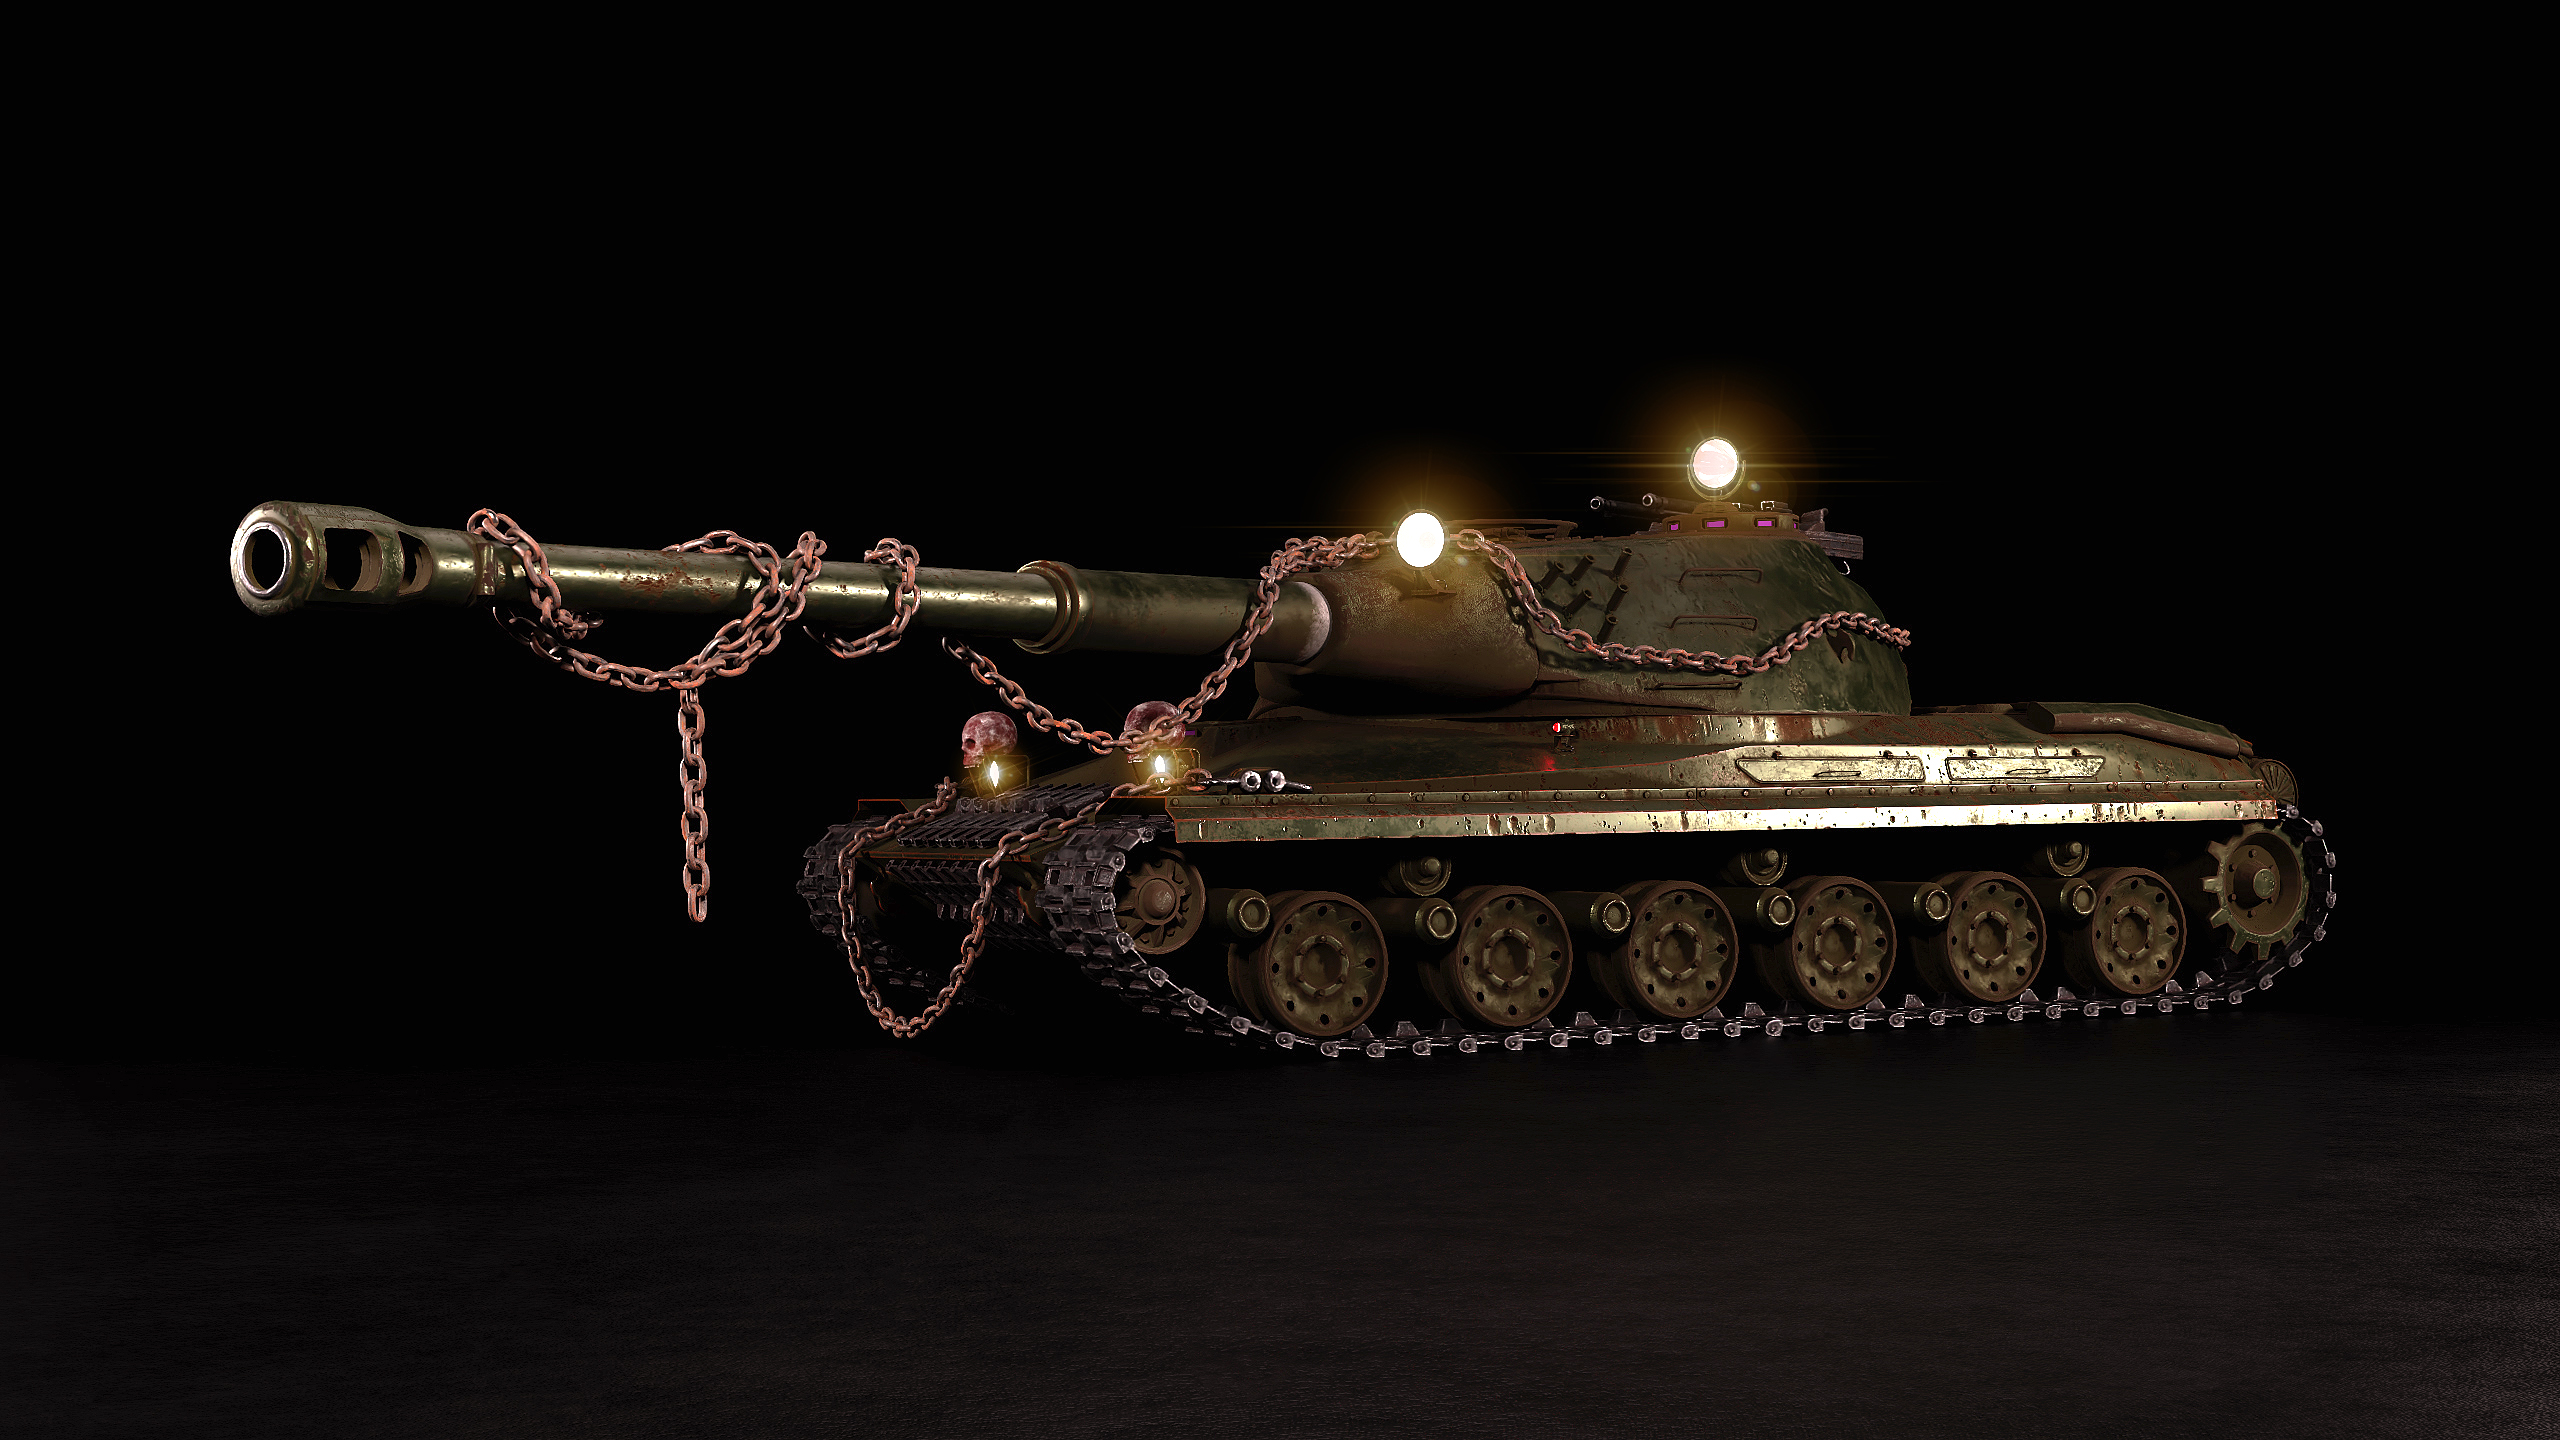 General 2560x1440 60TP tank Cold War rust chains metal skull lights CGI fictional war military